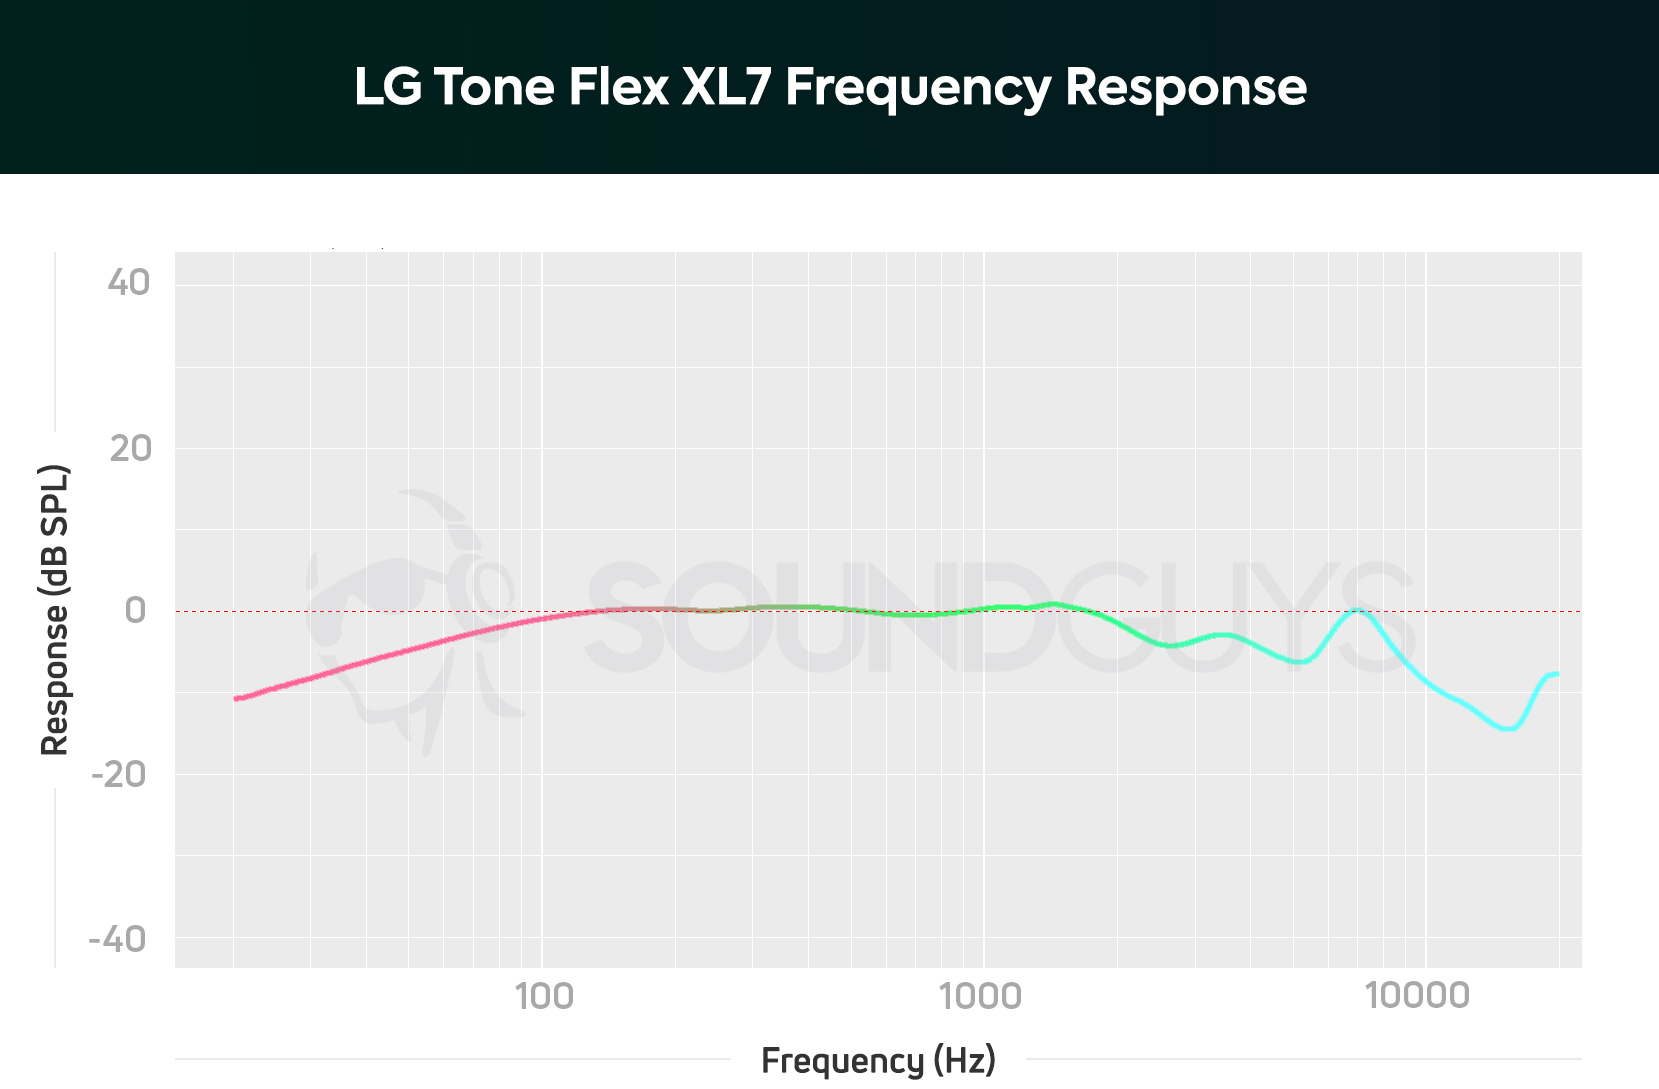 LG Tone Flex XL7 frequency response chart.